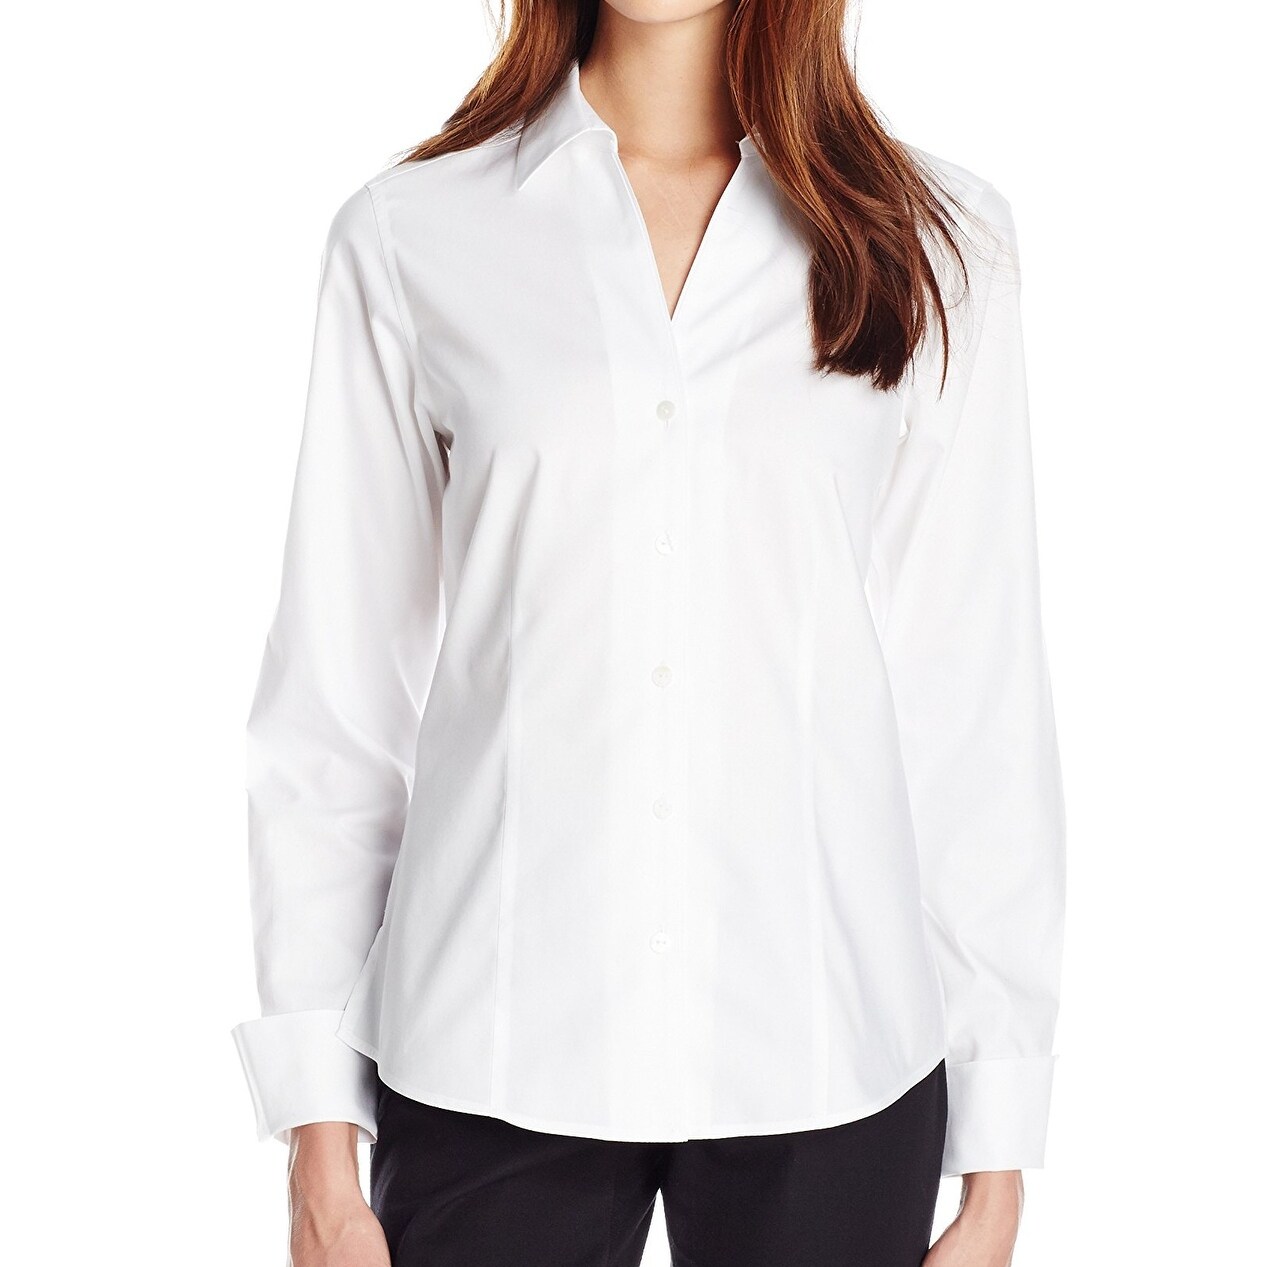 white v neck dress shirt